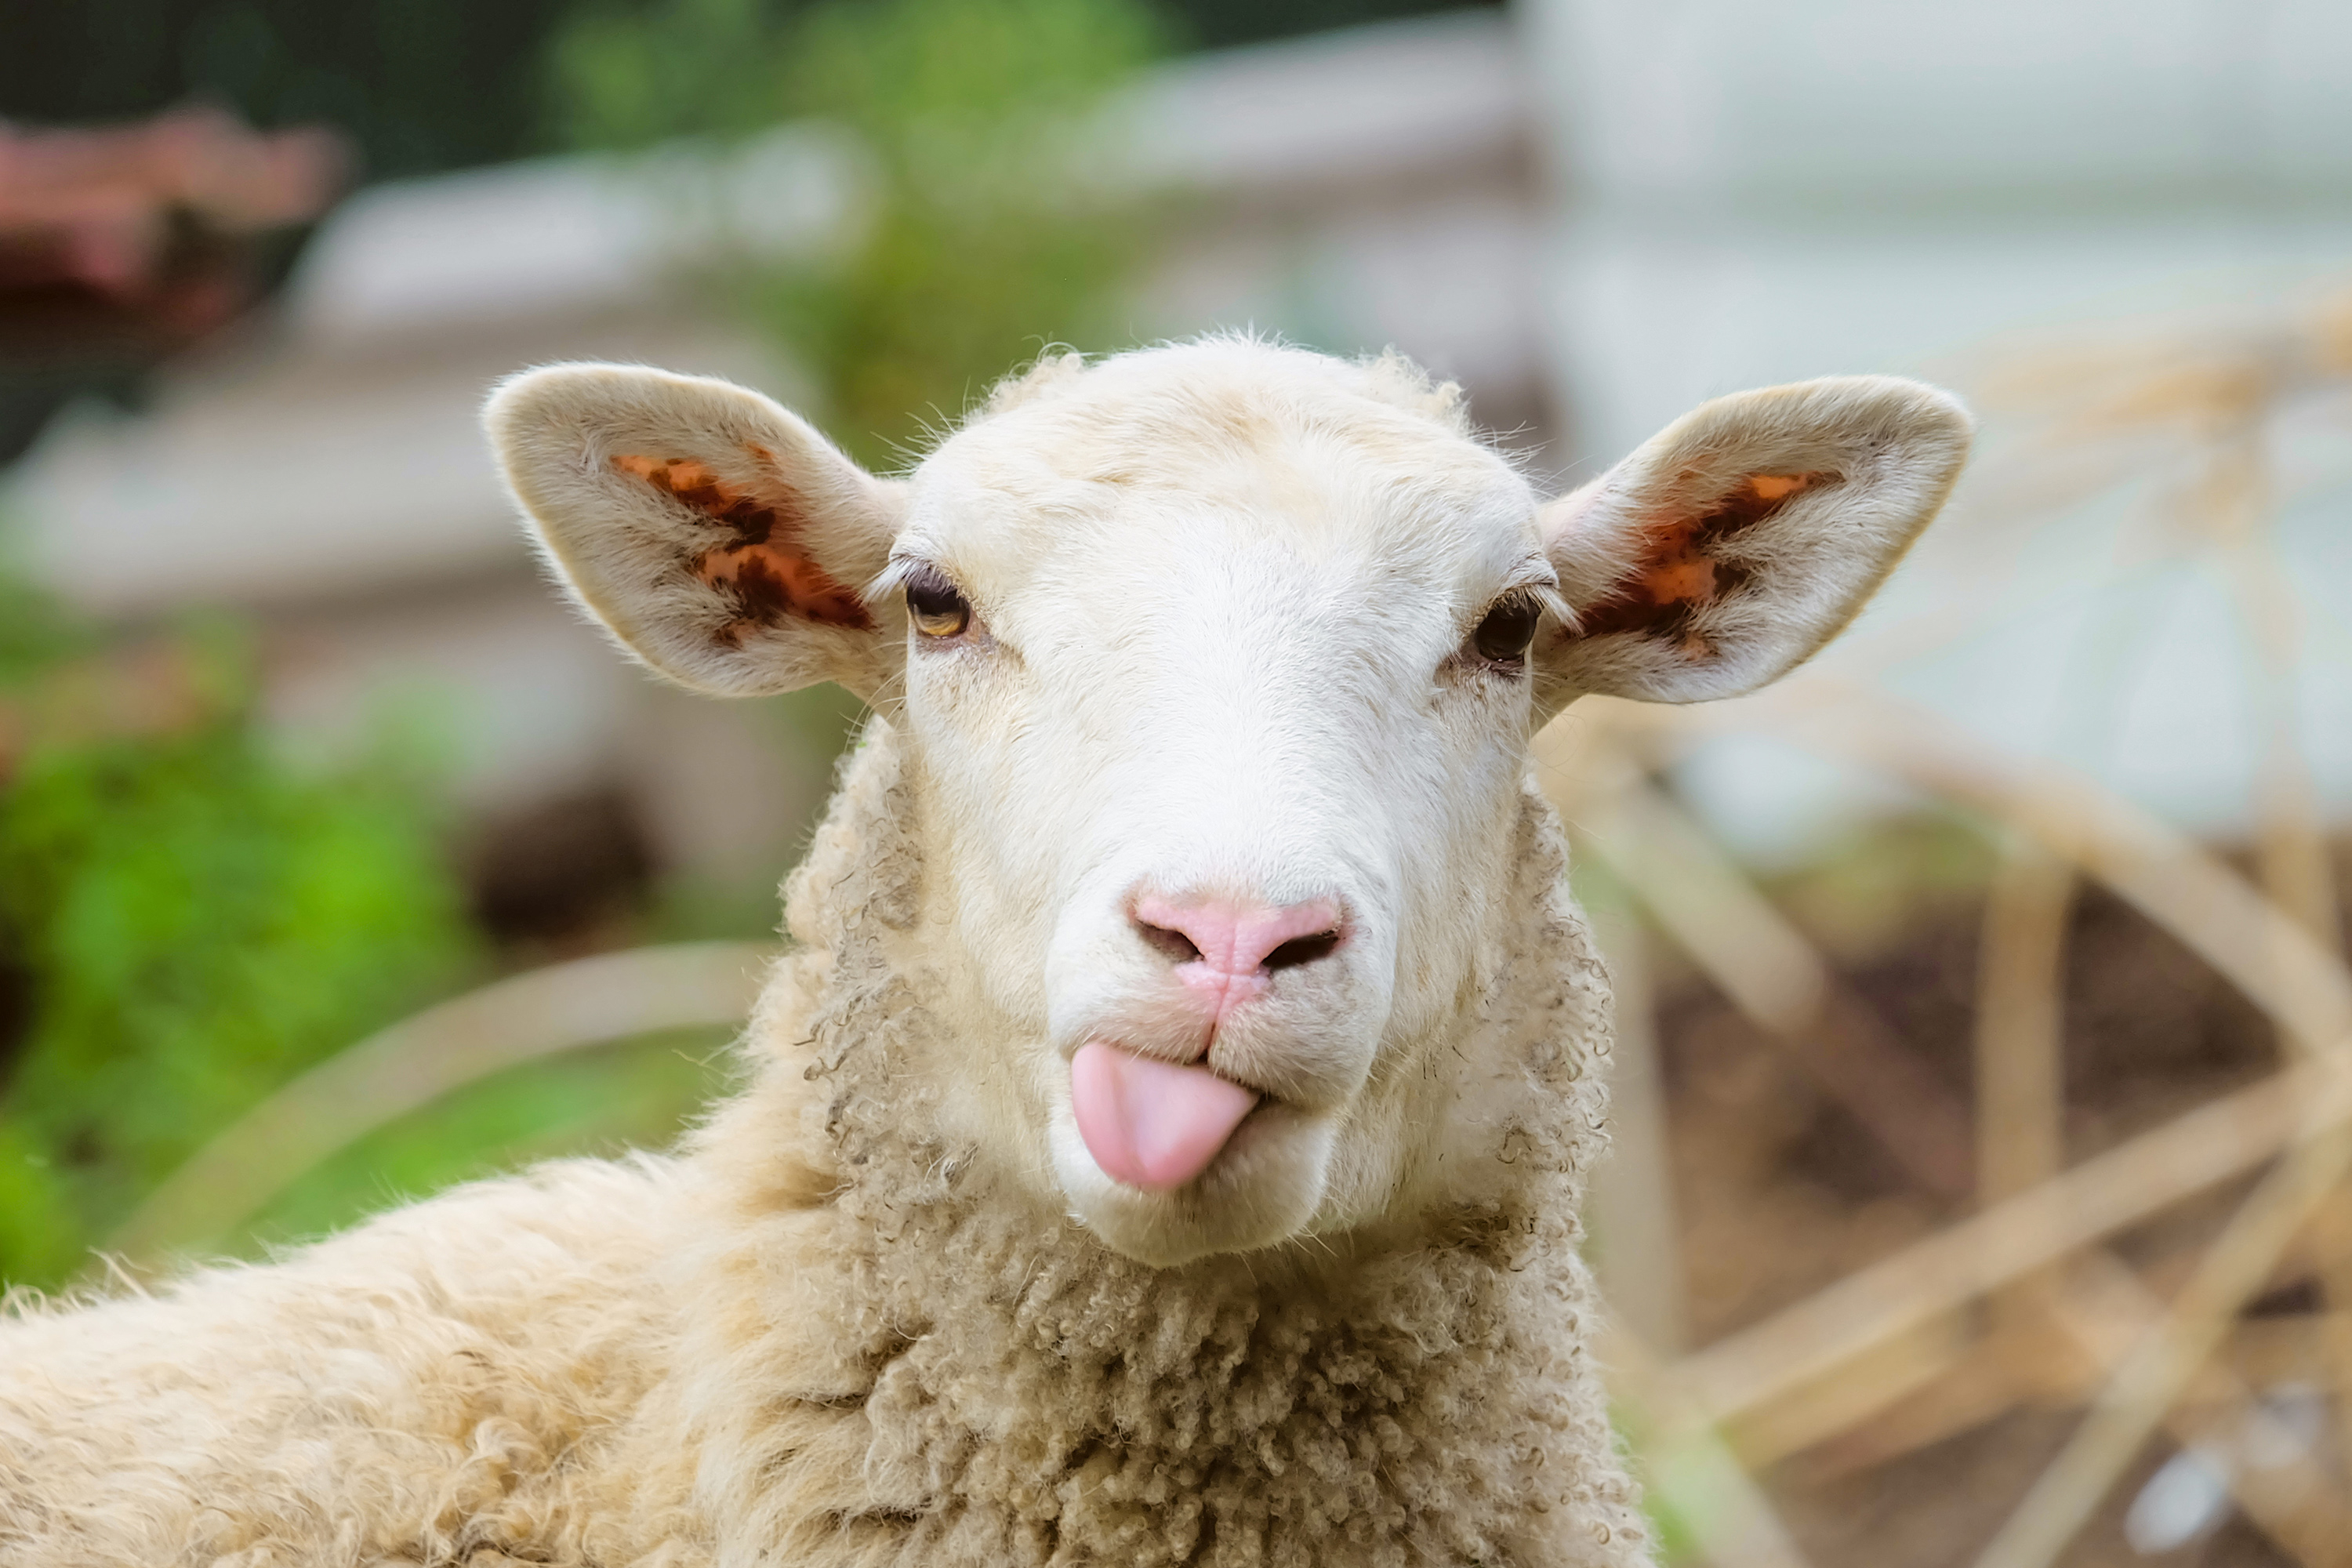 Kiwis tax sheep and cattle burps